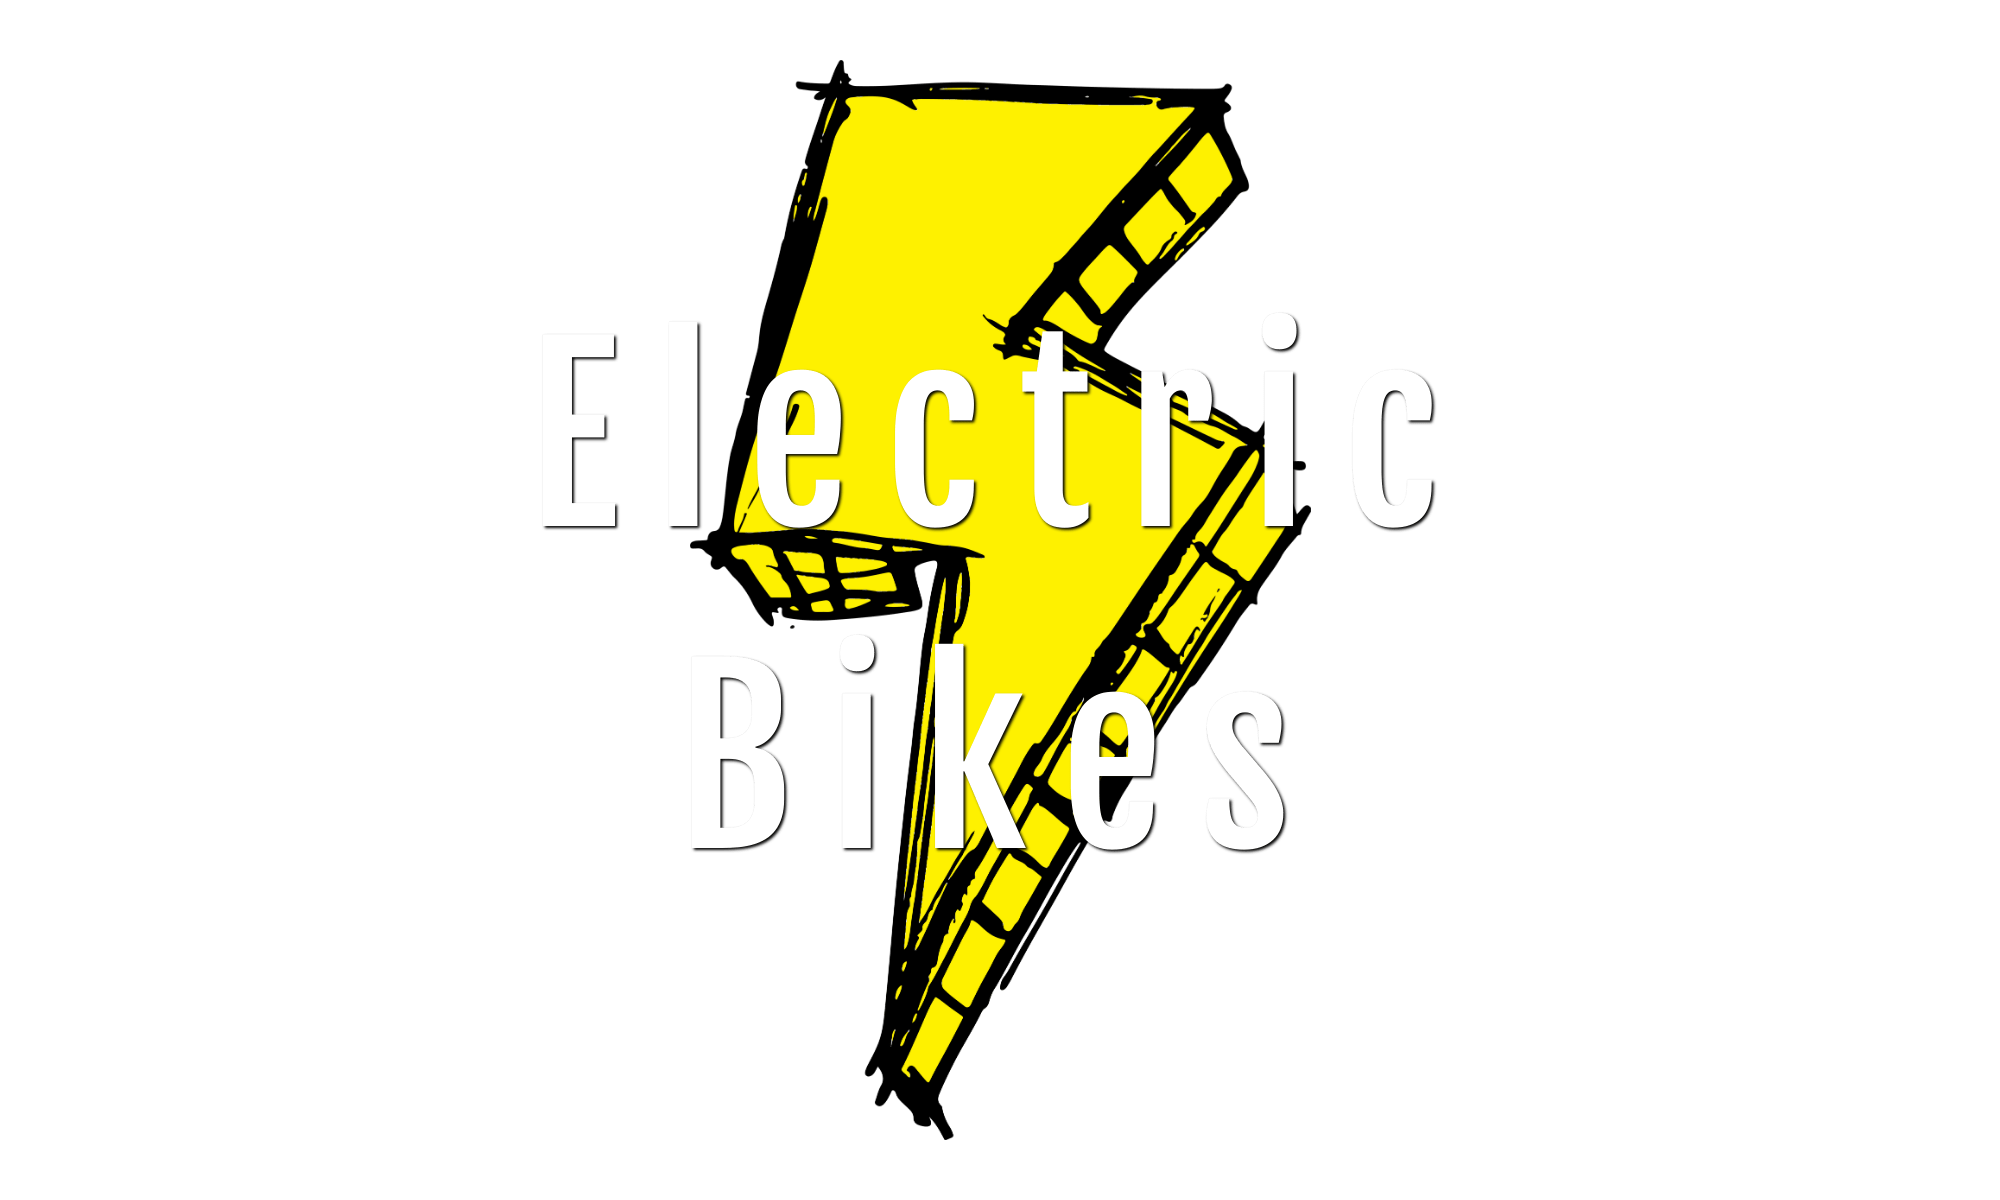 Electric bicycles, e-bike, electric bikes, Az, Arizona, Electric bike store, Scottsdale, Mesa, Chandler, Ahwatukee, Gilbert, Phoenix, Bike shop